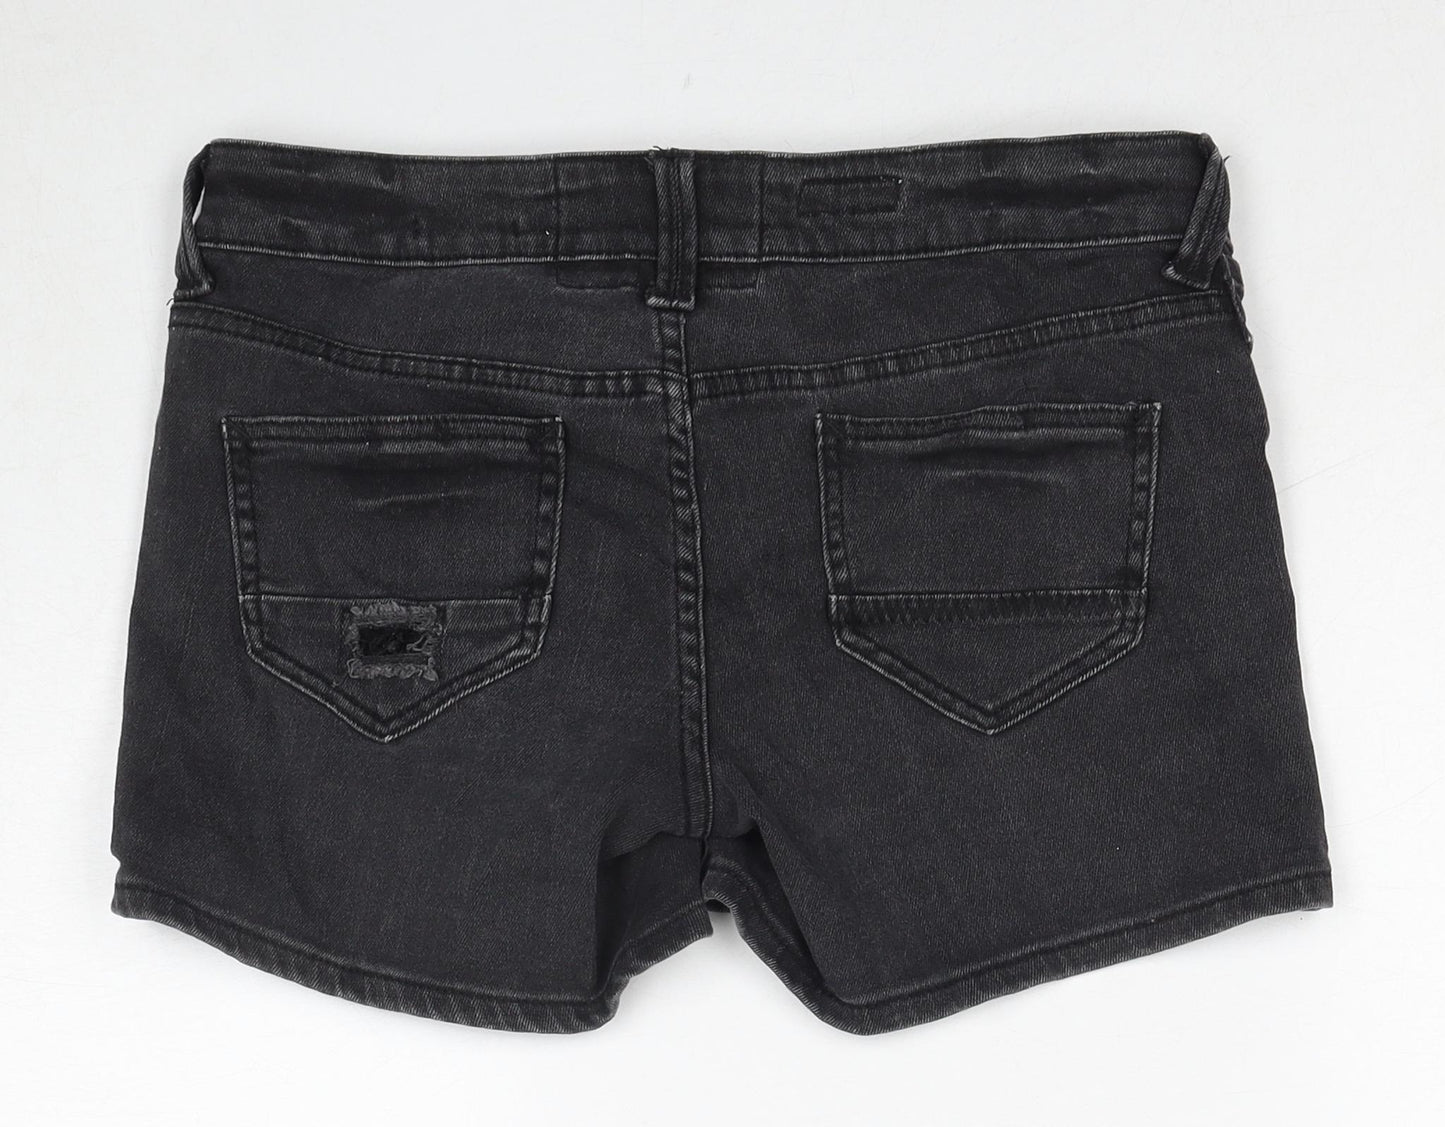 Authentic Womens Black Cotton Hot Pants Shorts Size 12 Regular Zip - Distressed